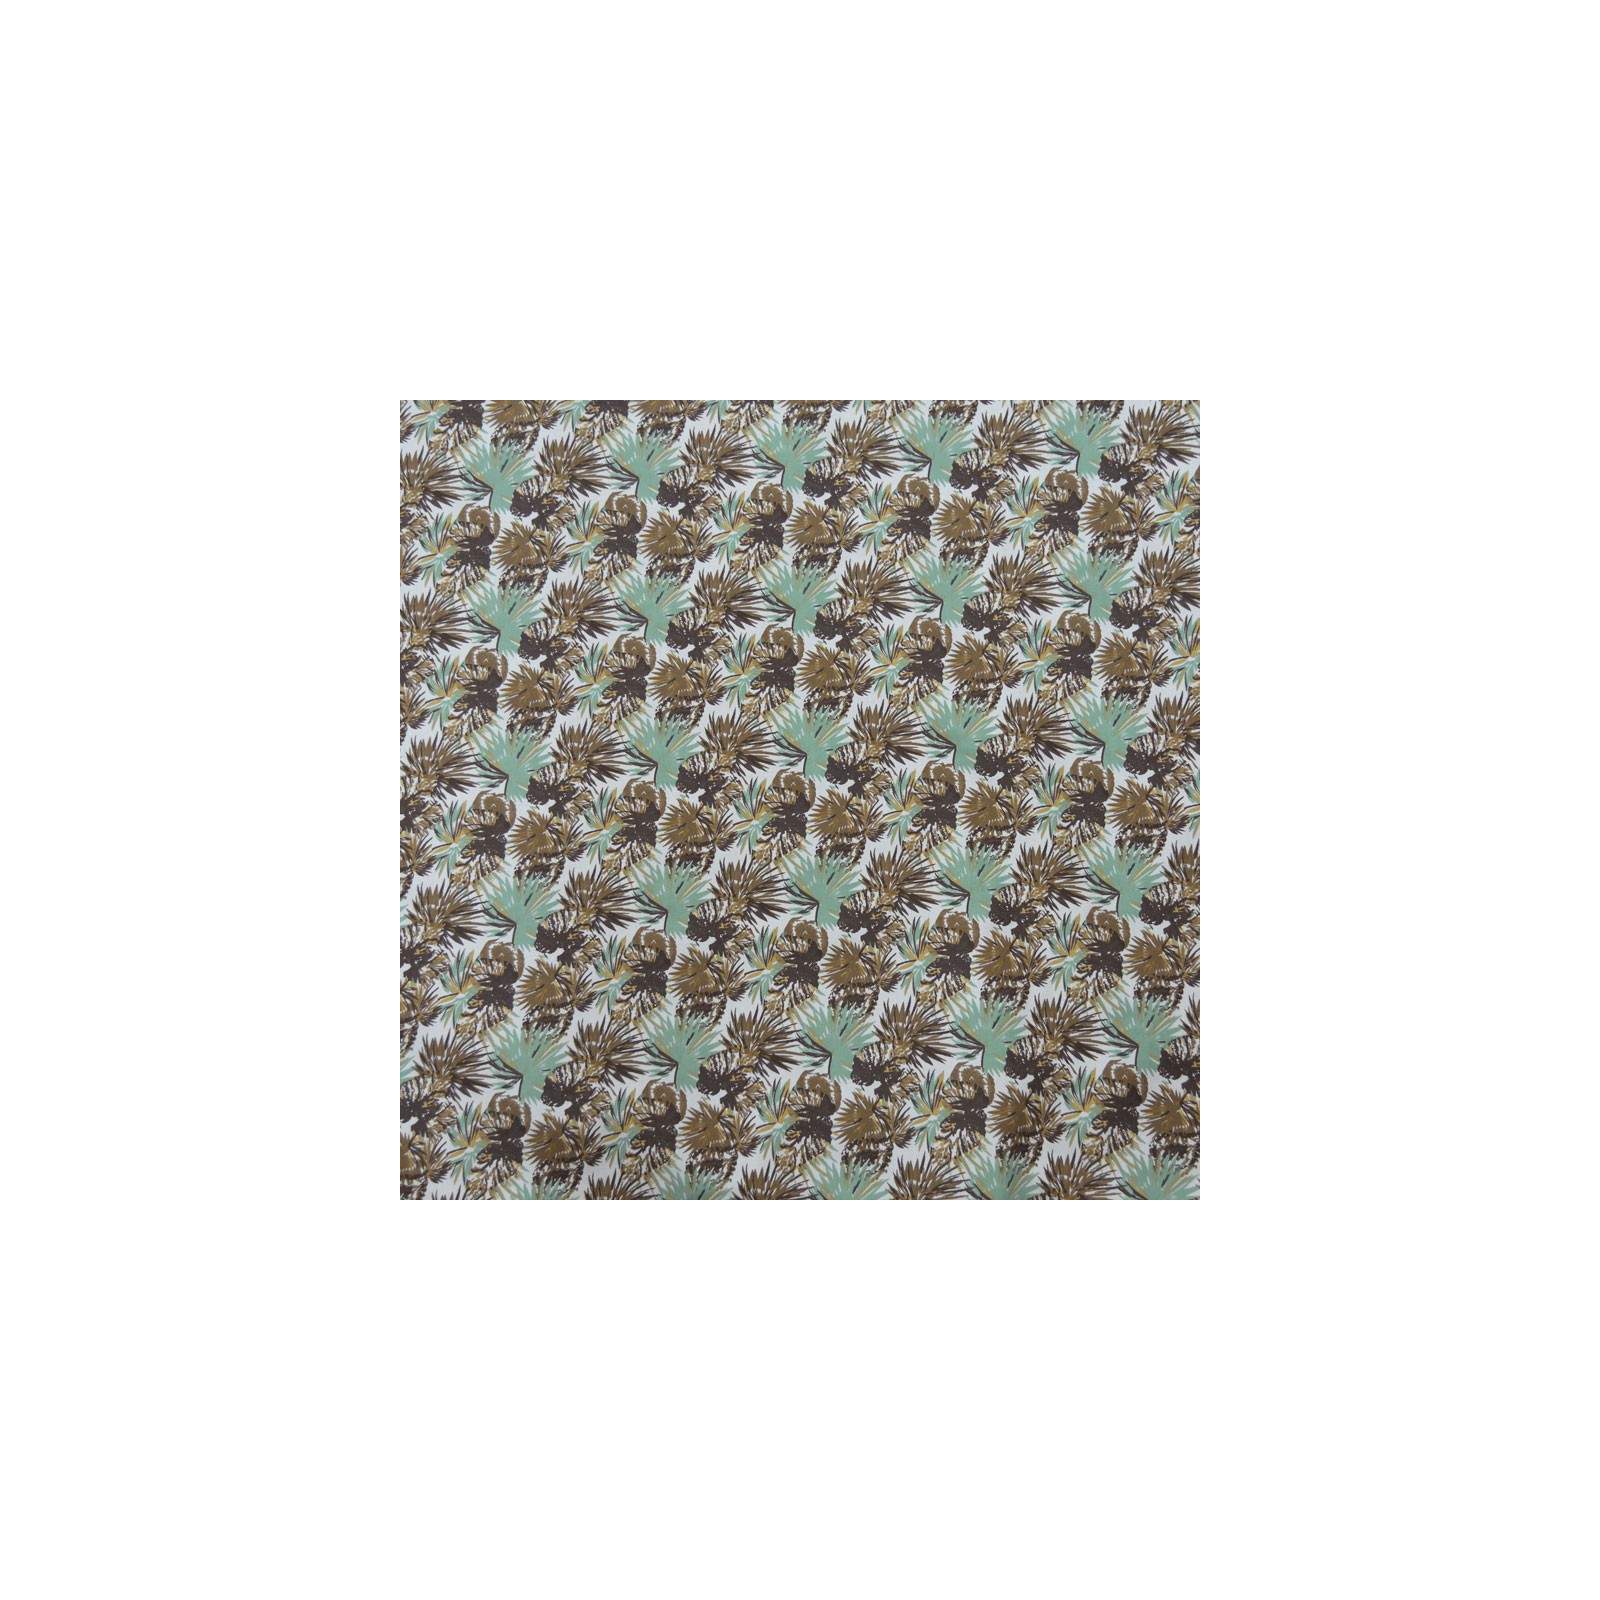 Tissu popeline de coton imprimé feuilles tropicales vert et taupe